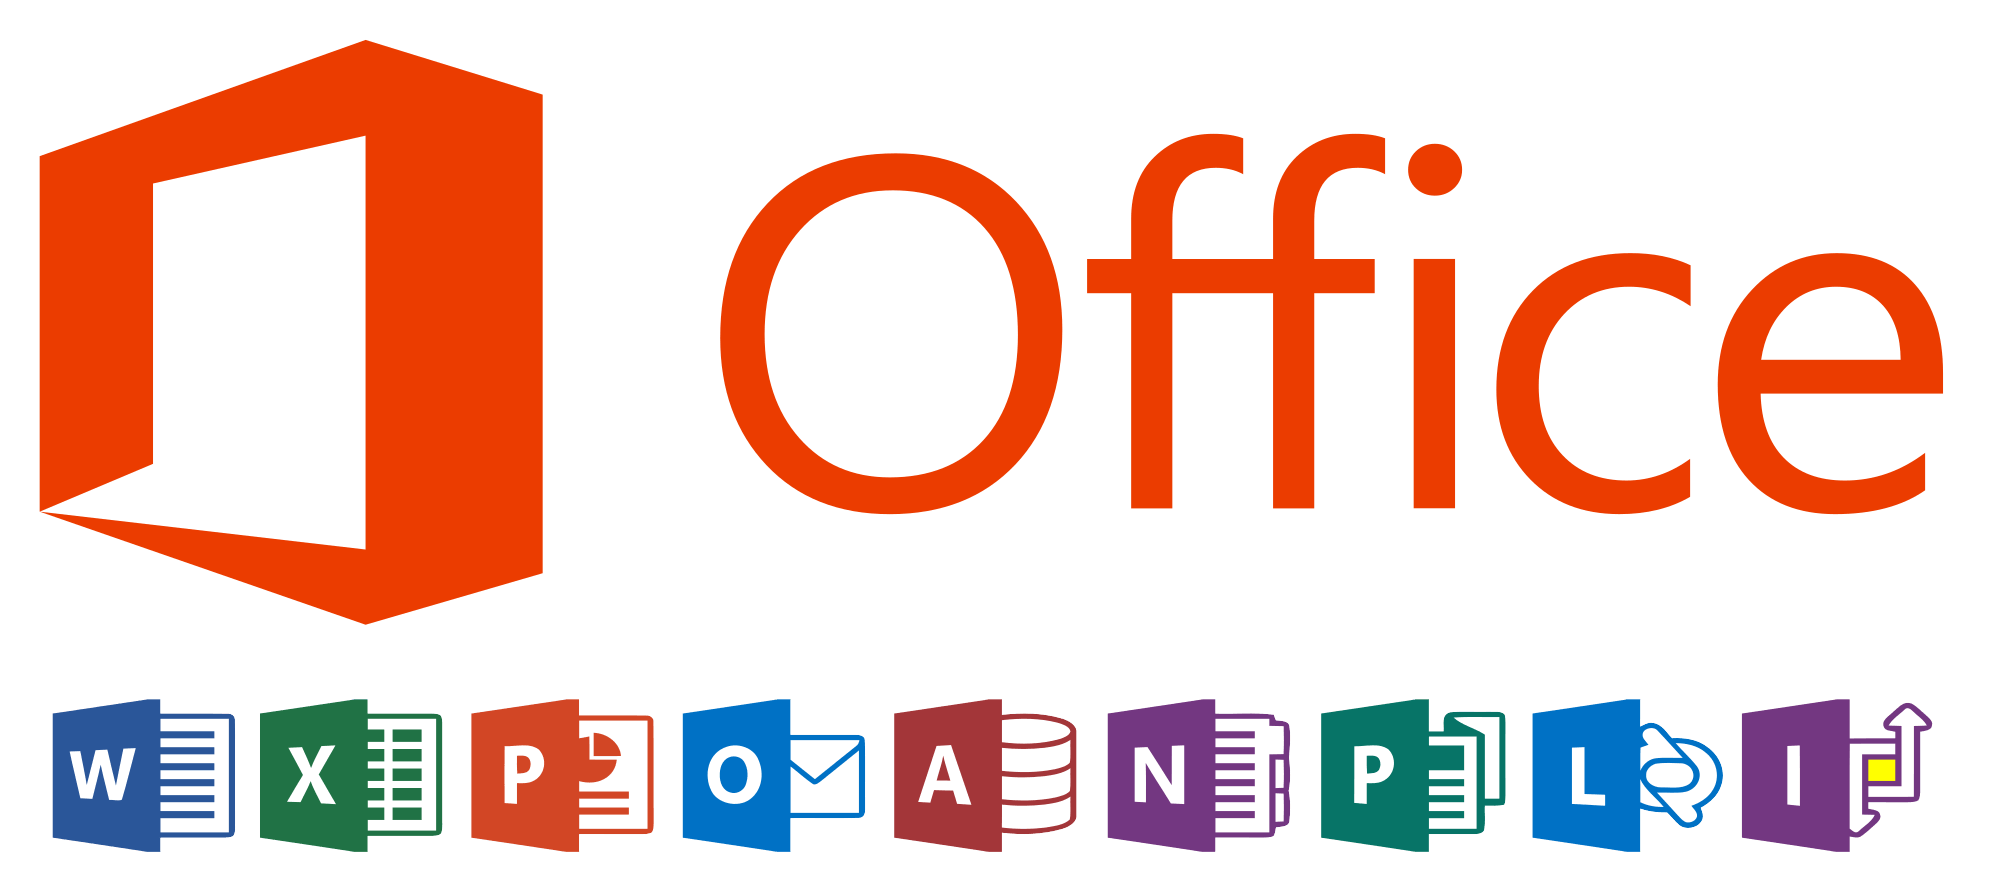 Microsoft Office 2018 Logo - File:2018 Microsoft Office logos.svg - Wikimedia Commons